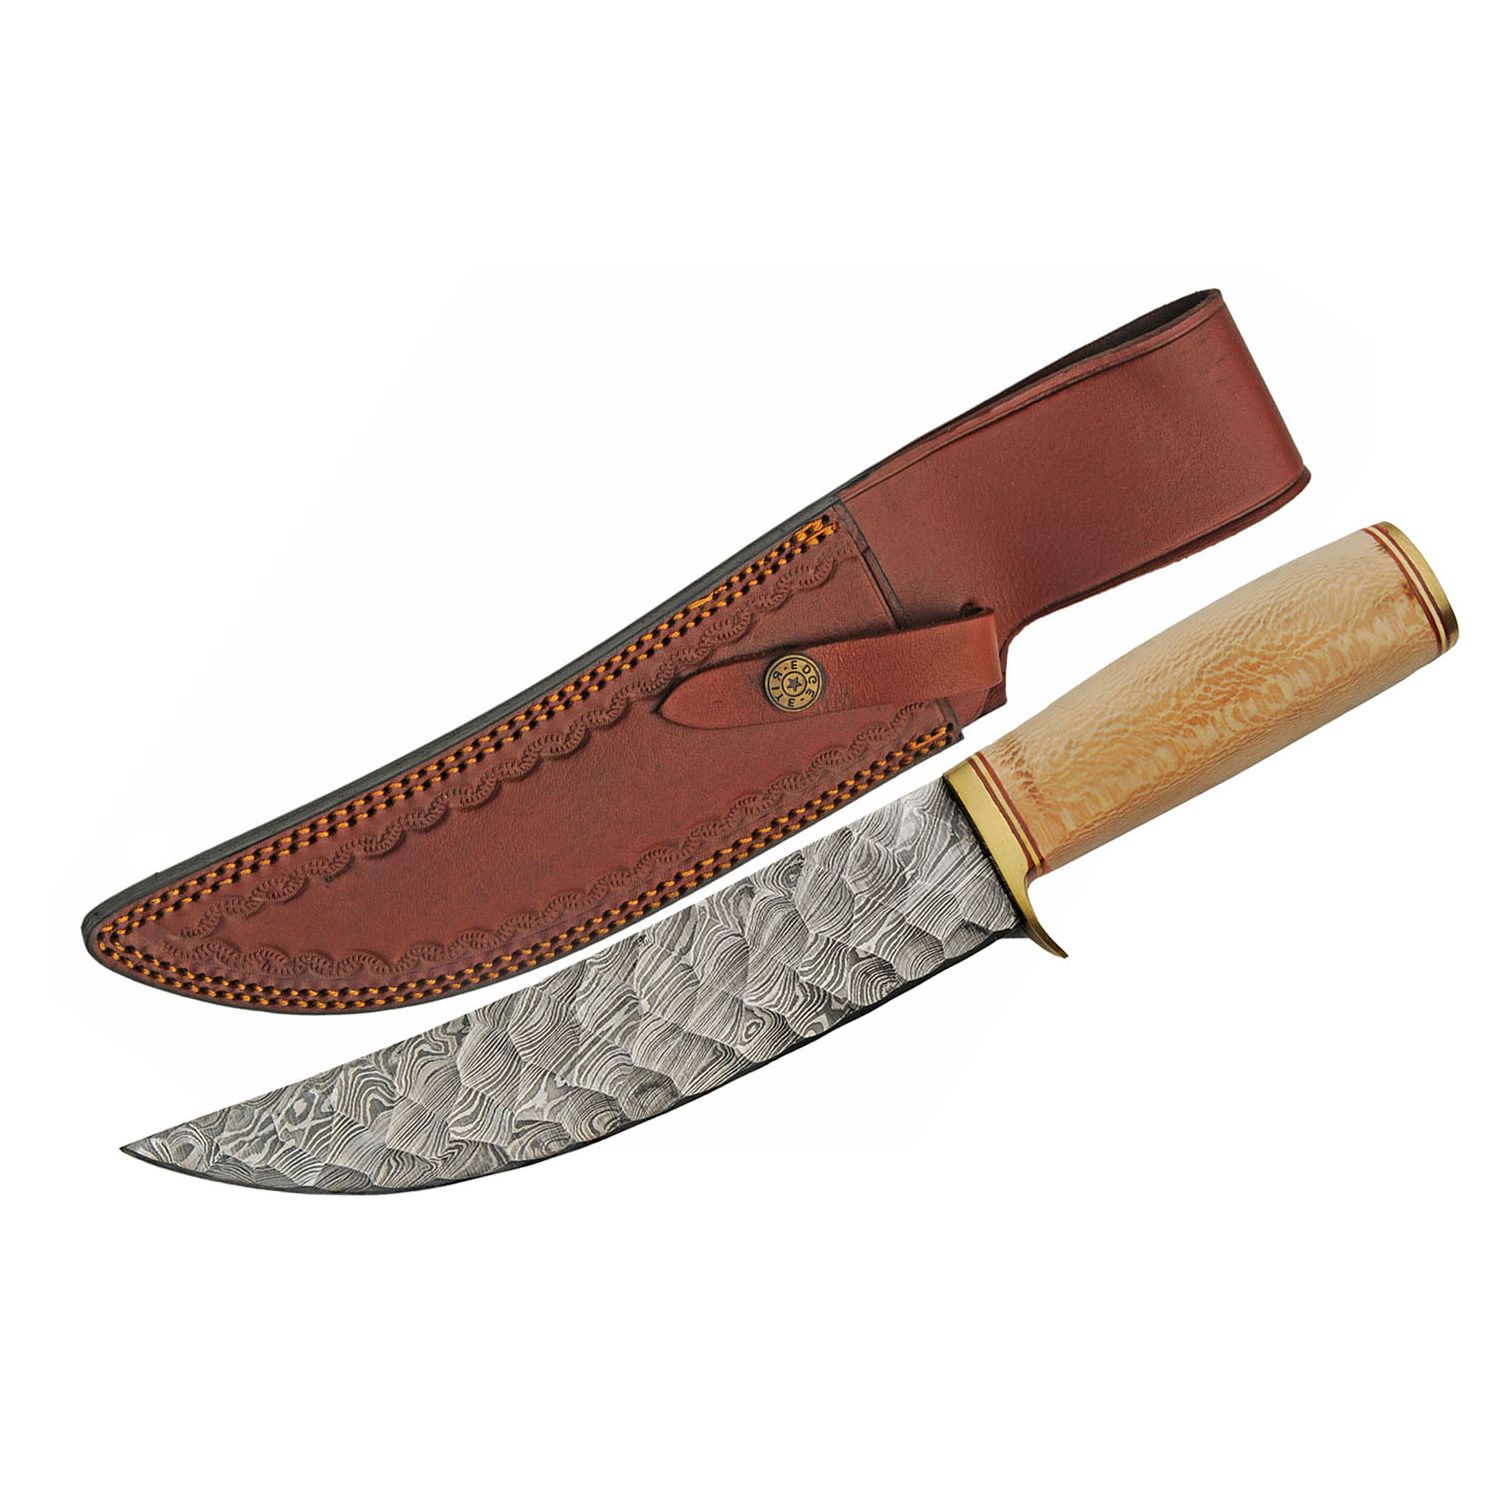 Hunting Knife 7.75in. Damascus Steel Upswept Blade Wood Handle Skinner + Sheath